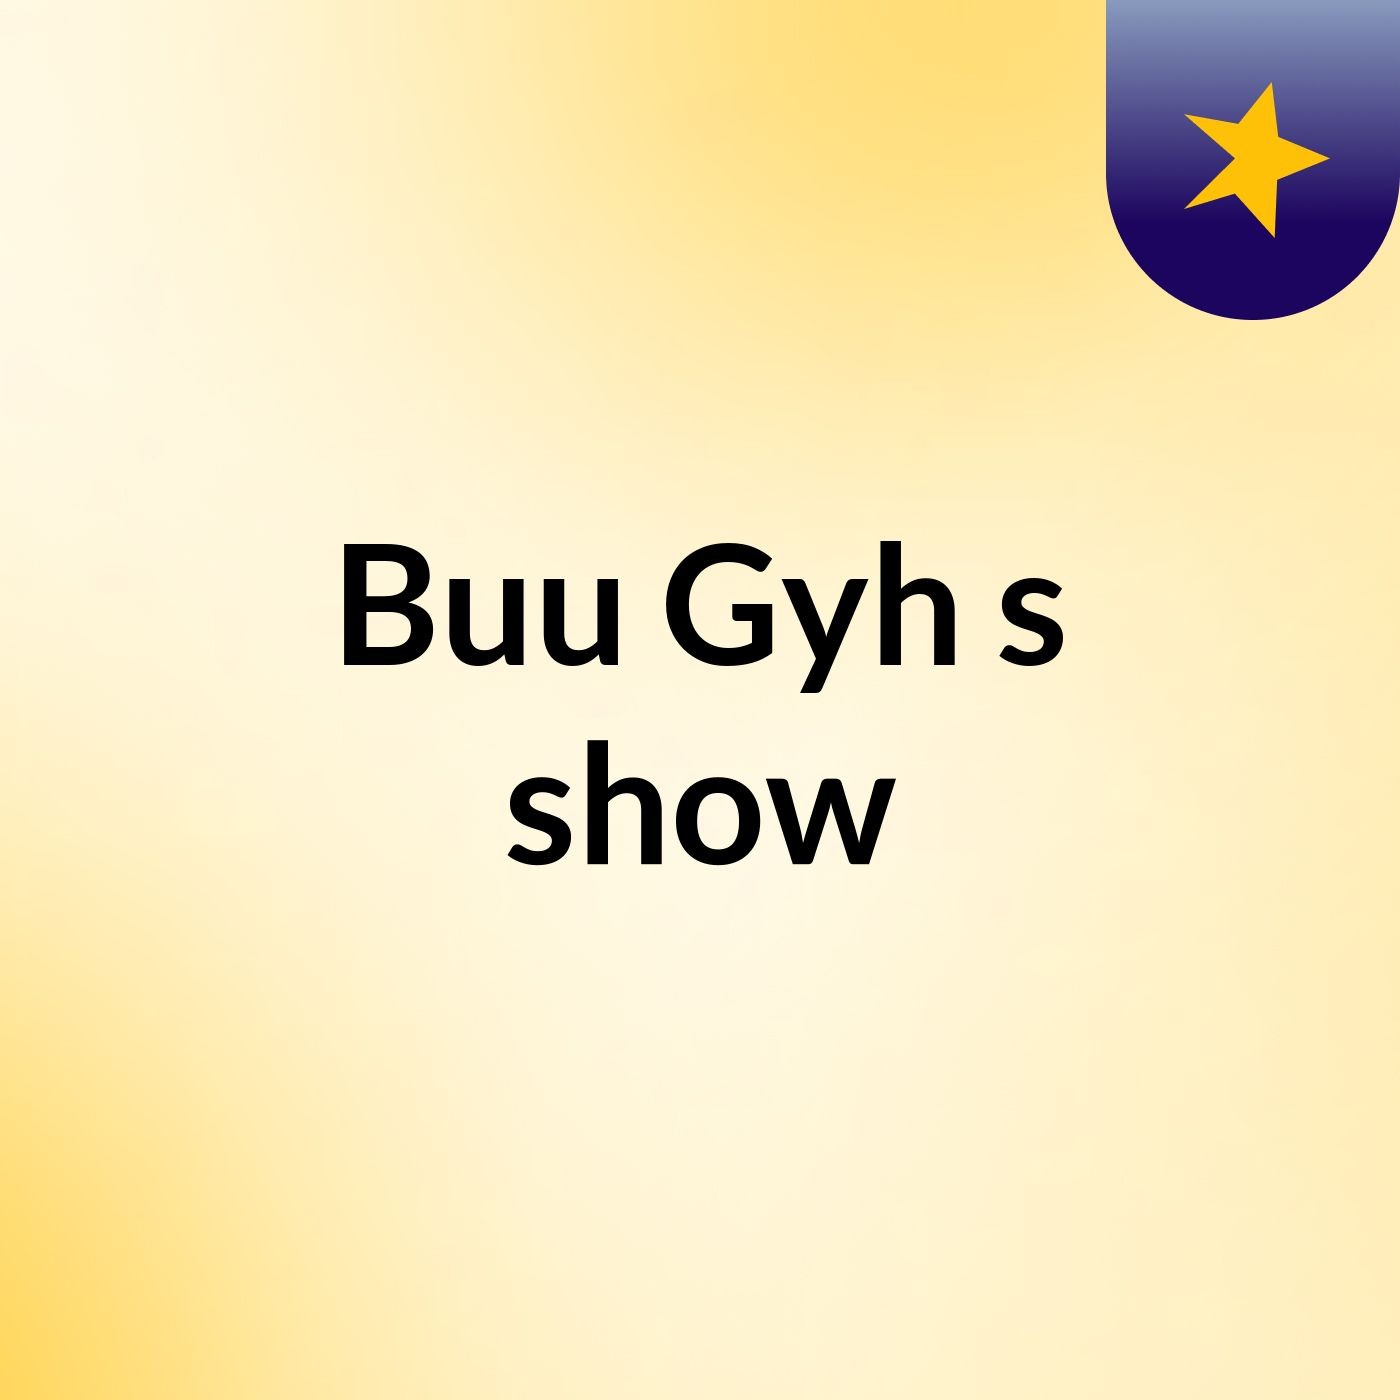 Buu Gyh's show